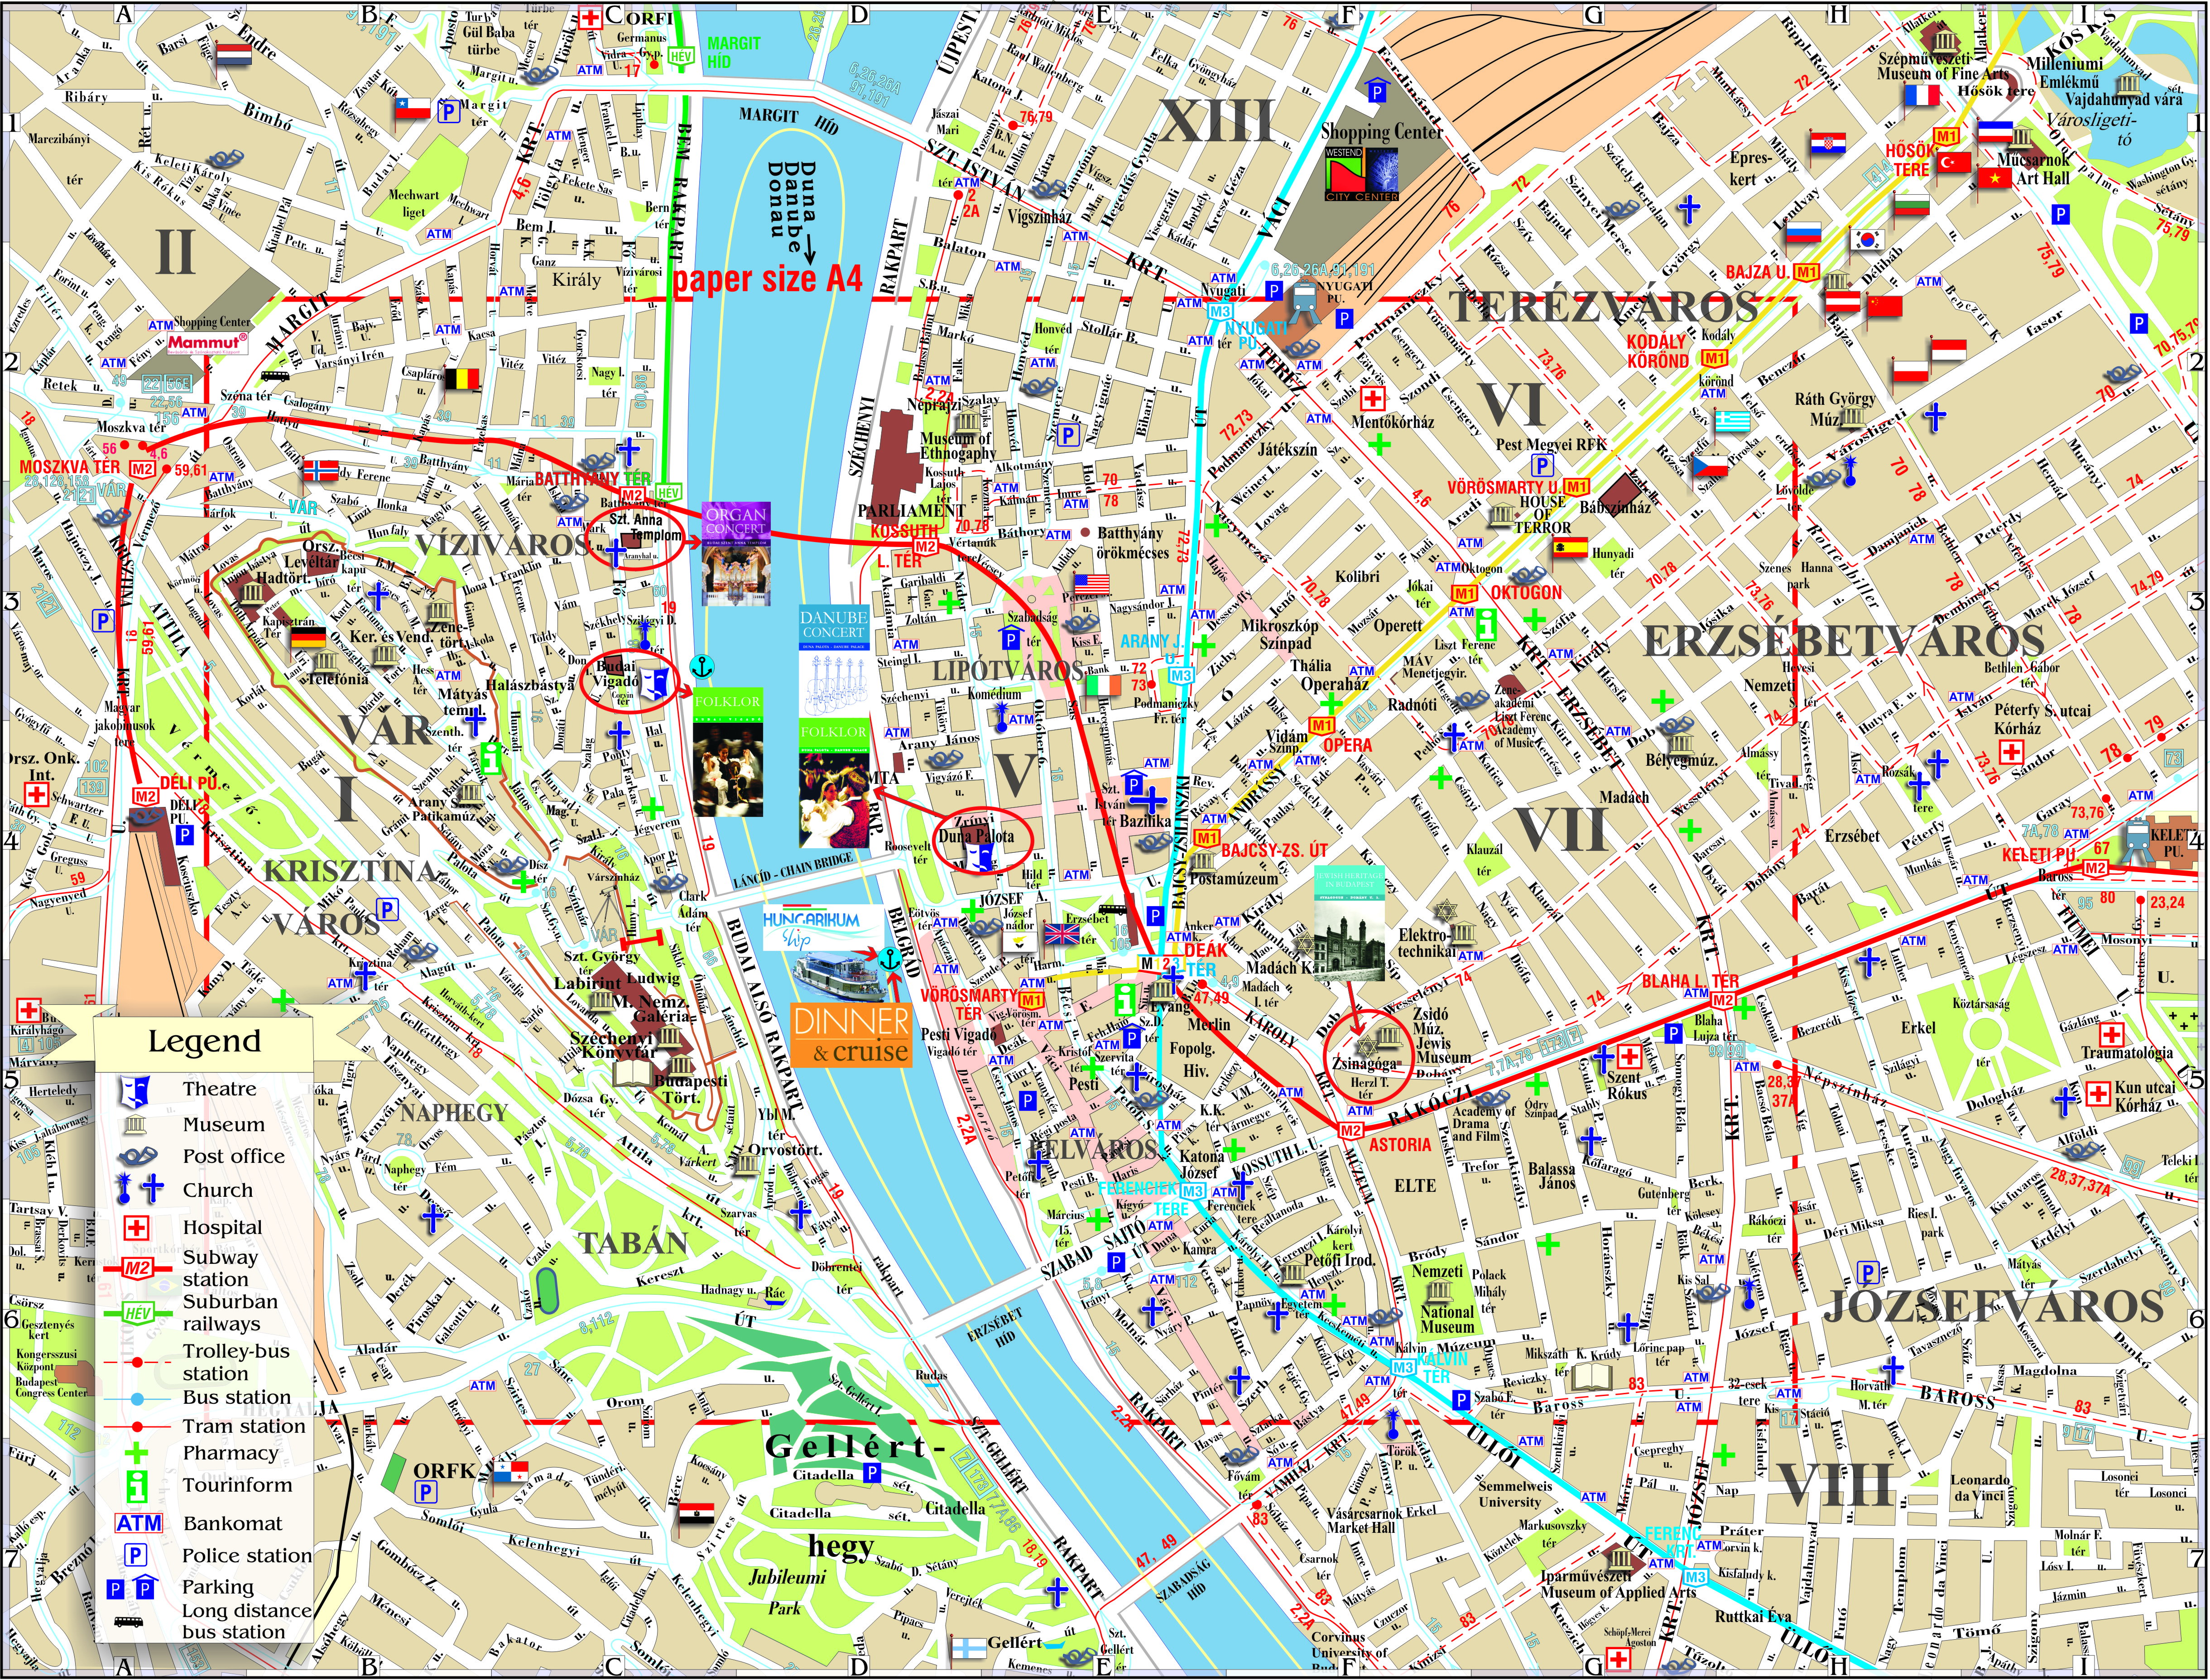 budapest térkép pdf Large Budapest Maps for Free Download and Print | High Resolution  budapest térkép pdf